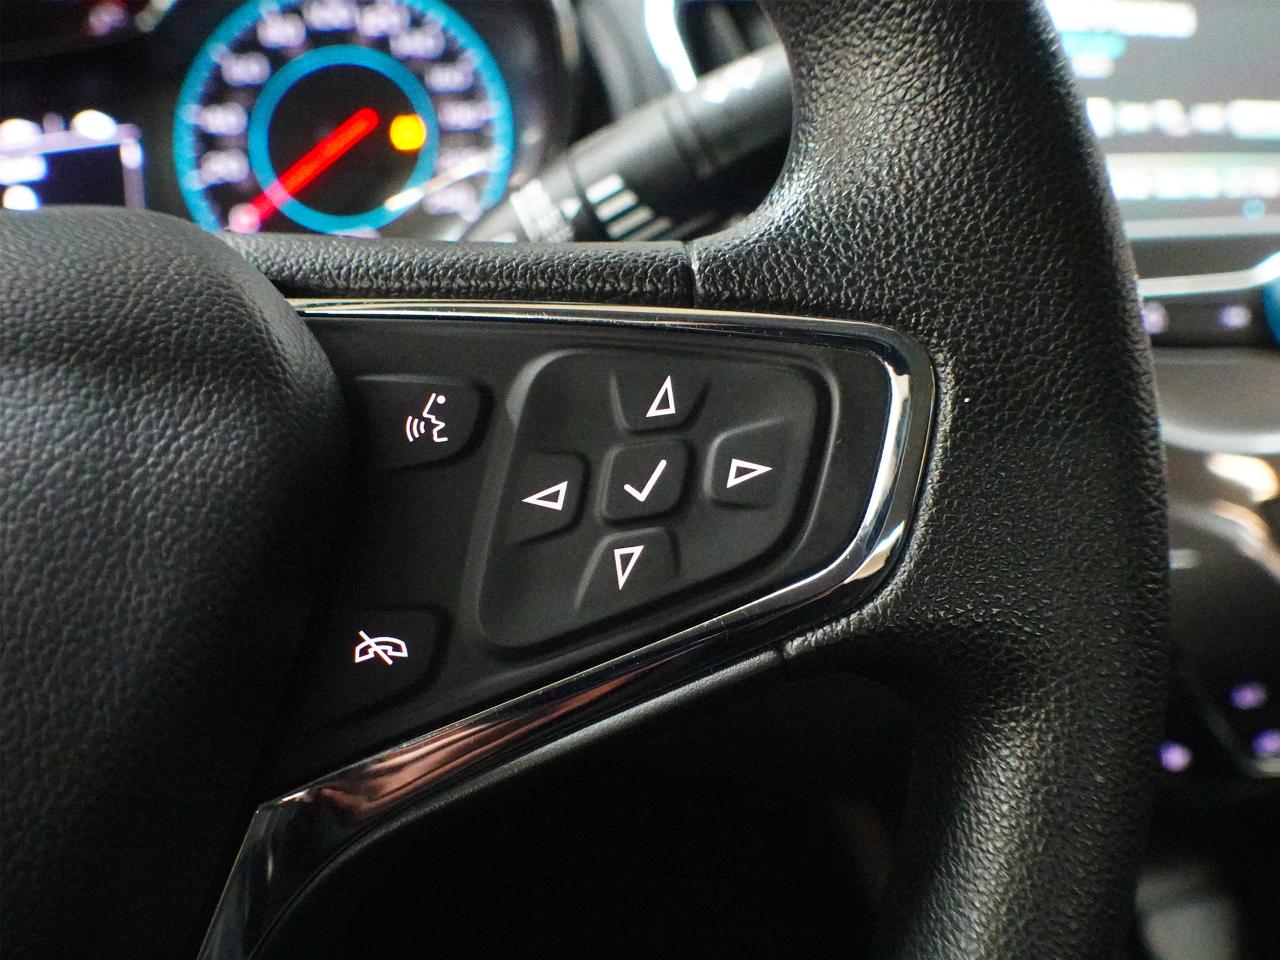 2018 Chevrolet Cruze LT | Heated Seats | Remote Start | WiFi | CarPlay